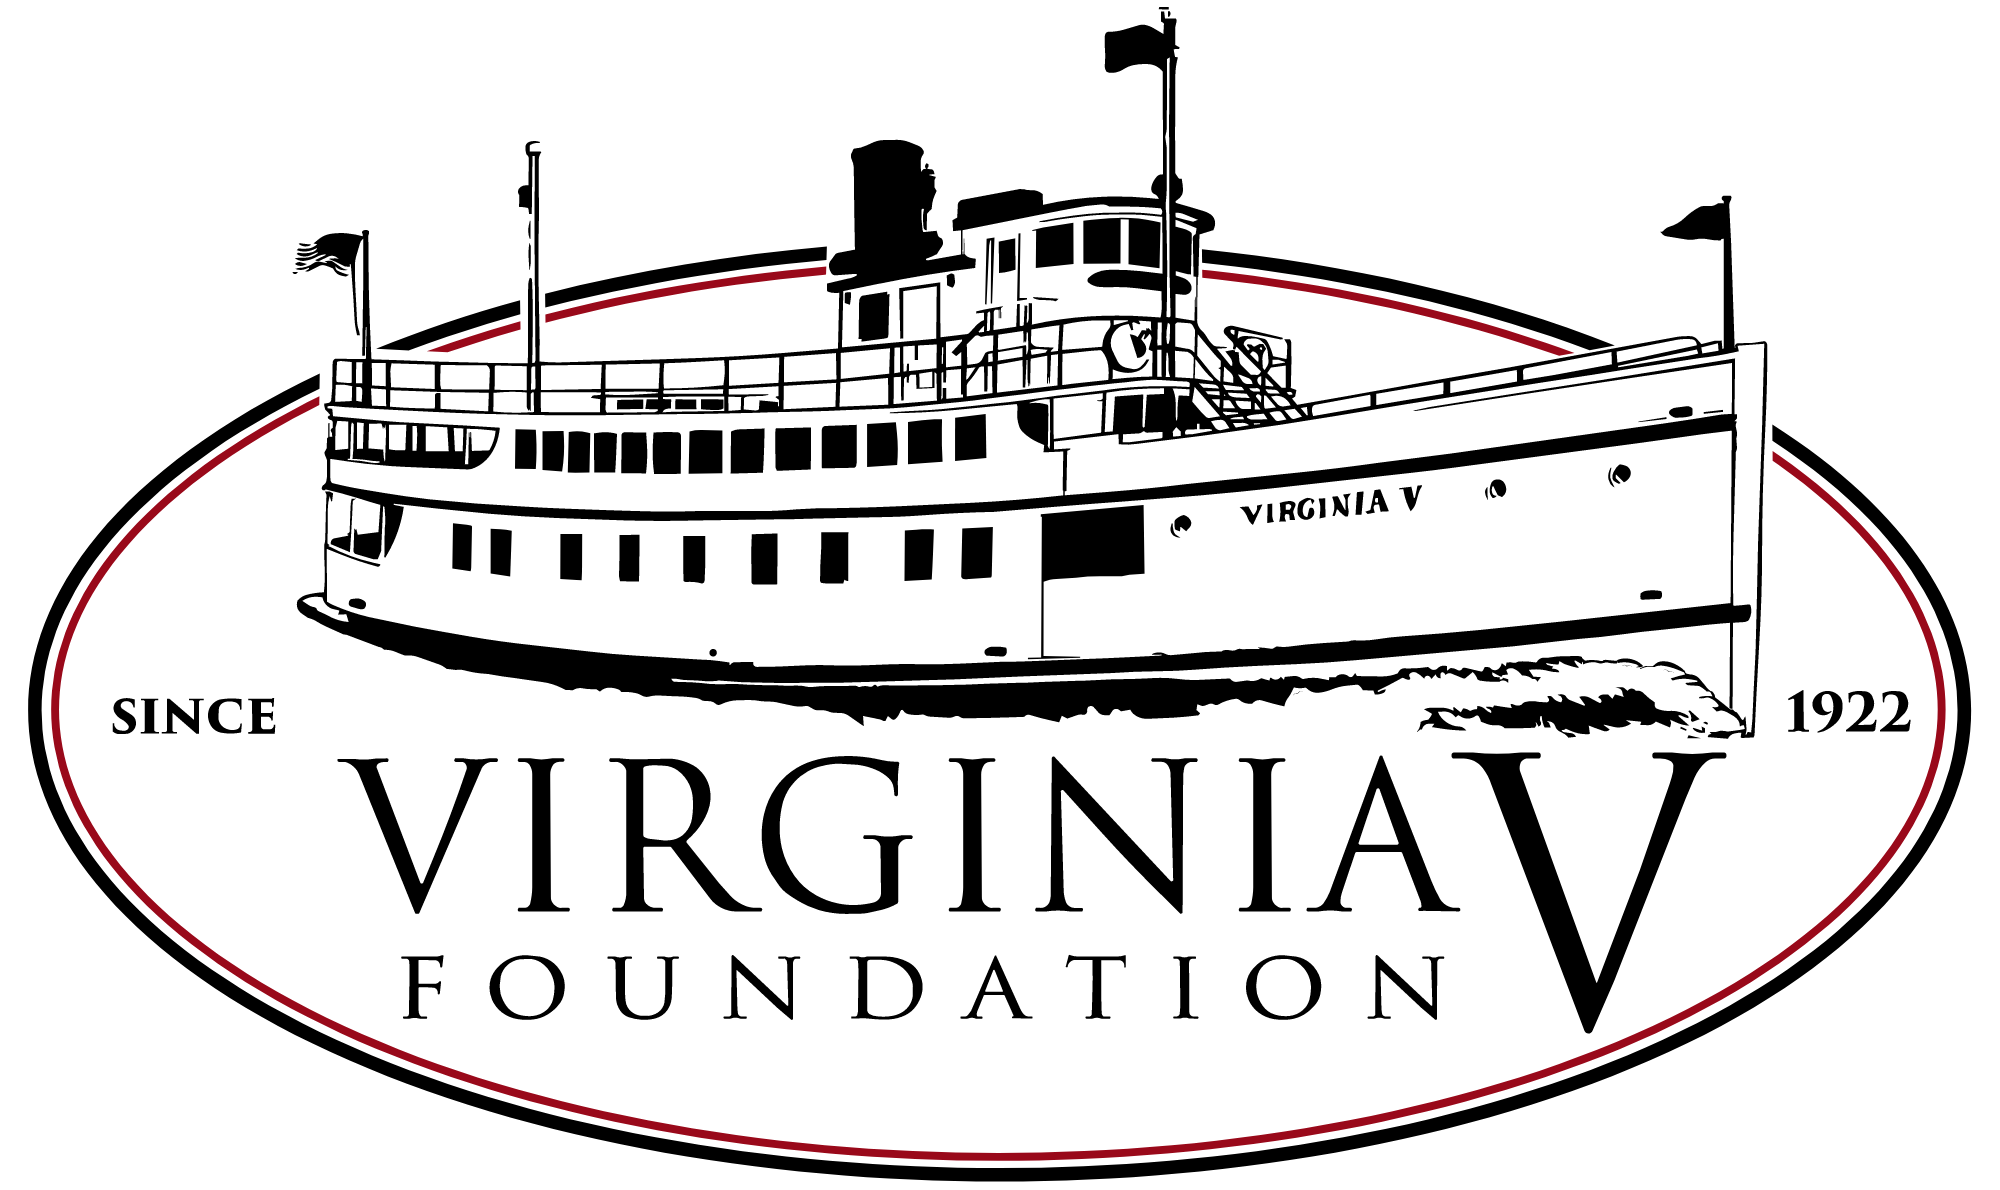 The Steamer Virginia V Foundation